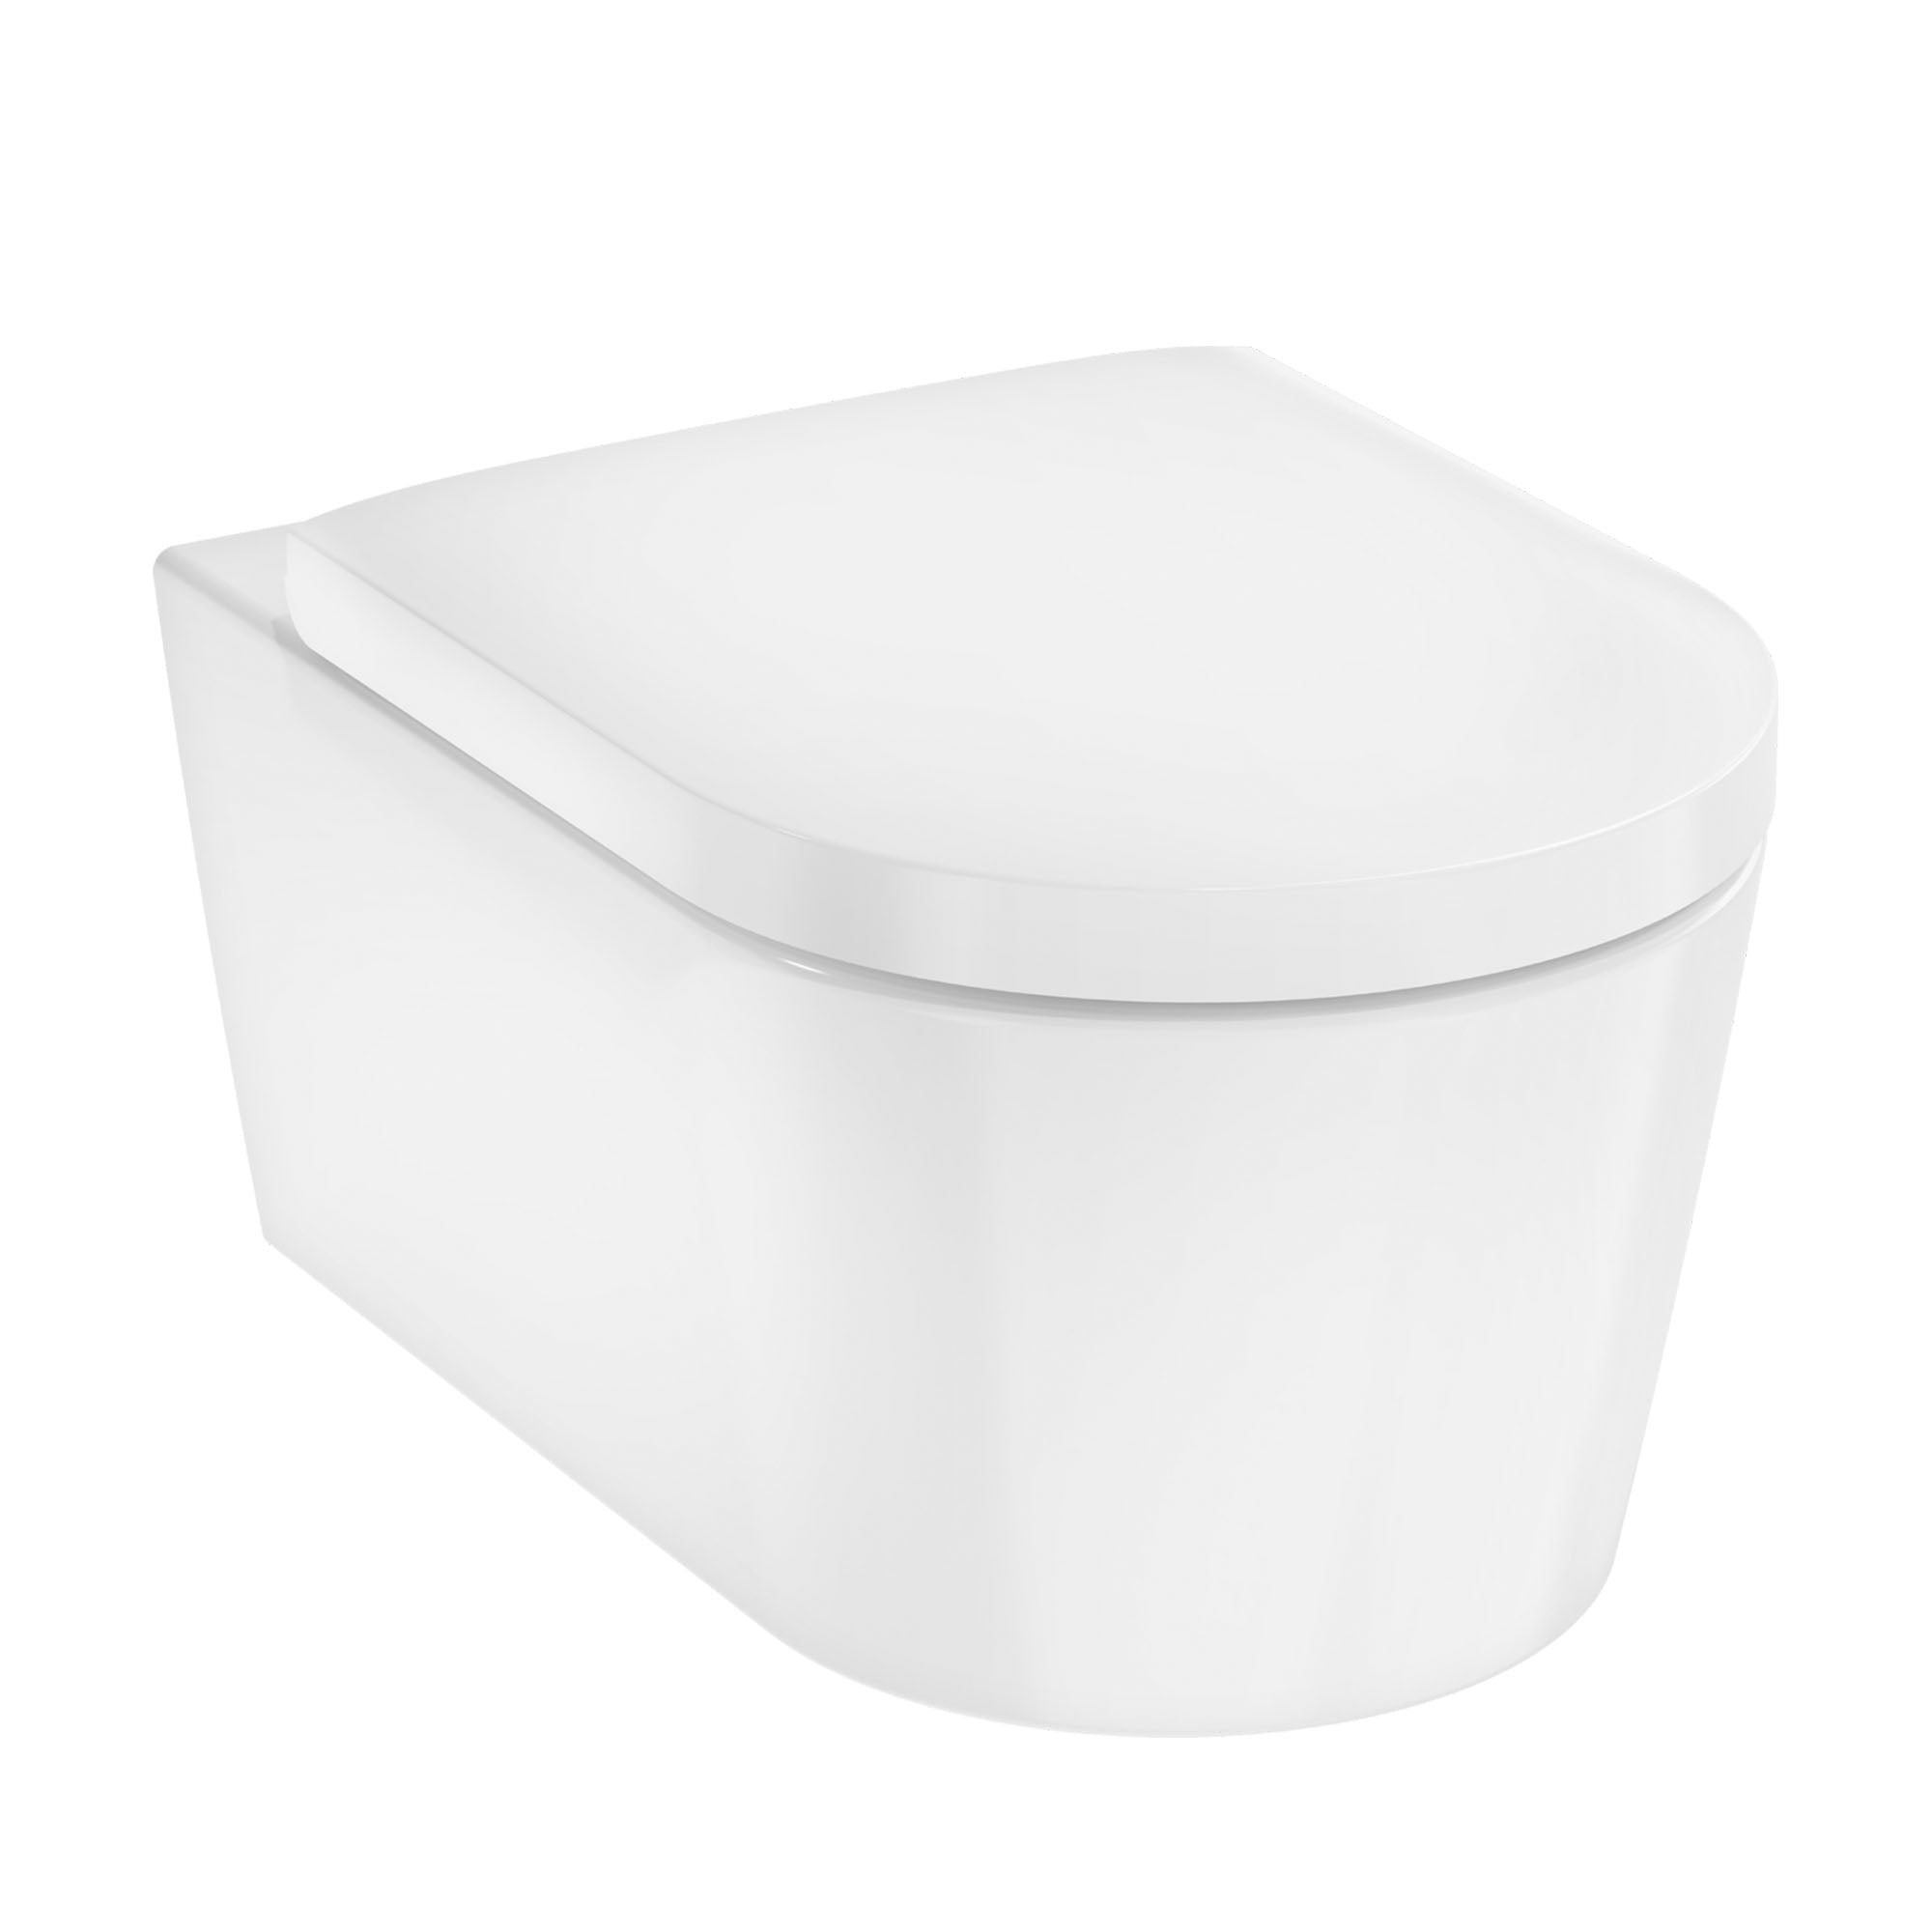 elupura s rimless wall mounted wc pan with soft close seat white gloss